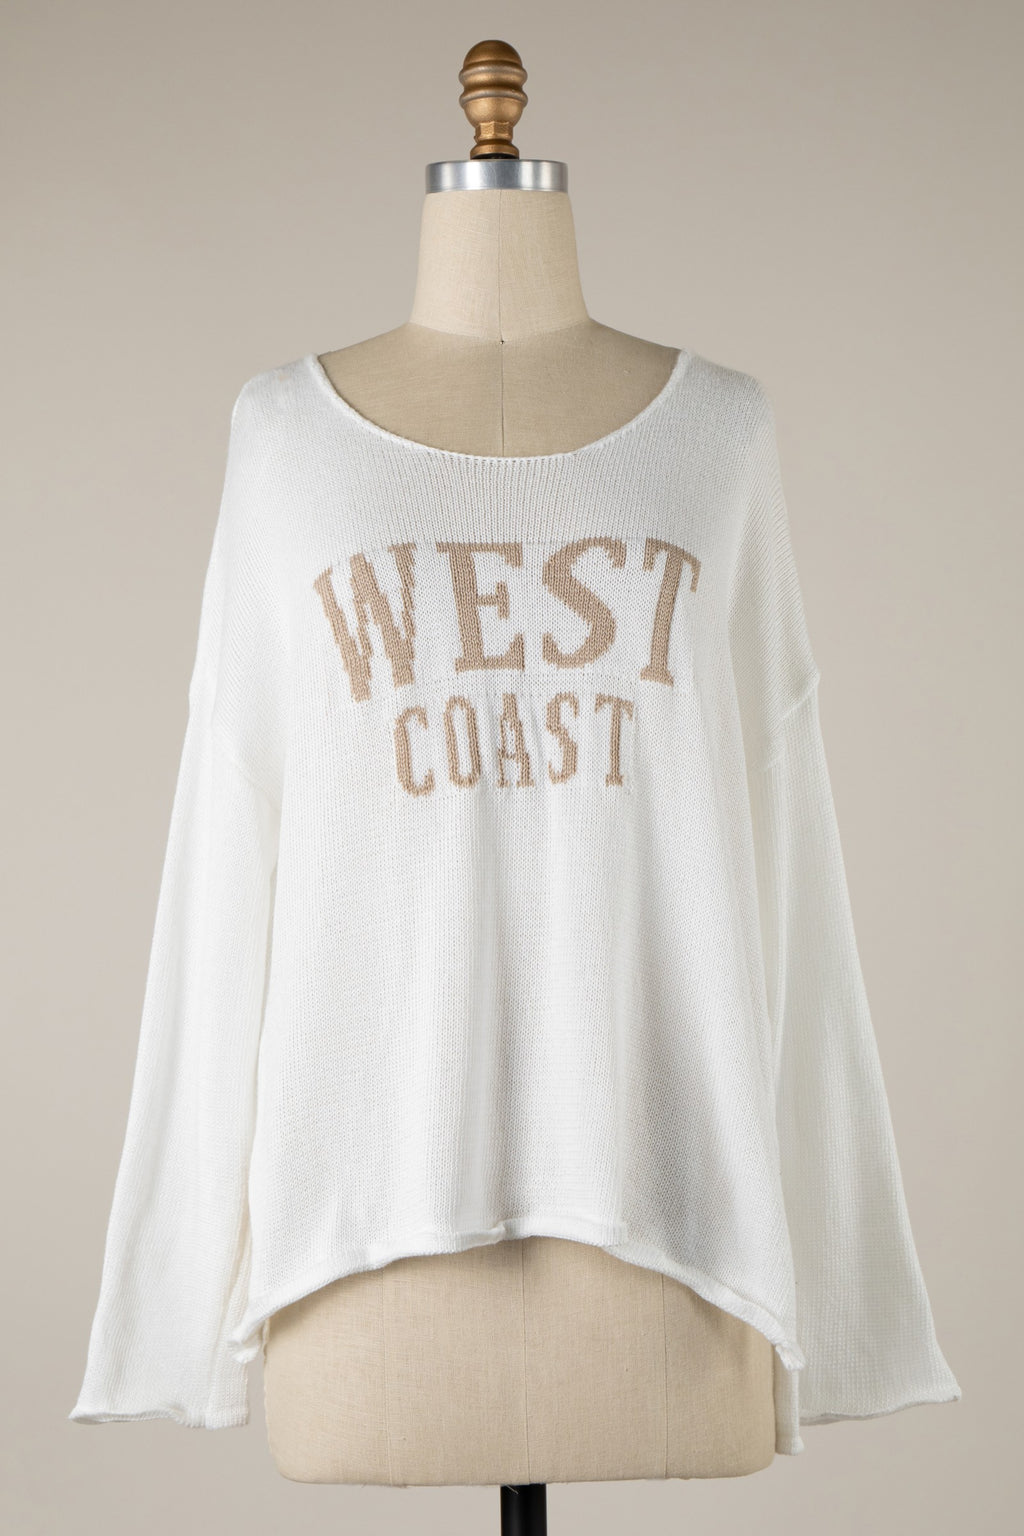 West Coast is Best Coast Sweater